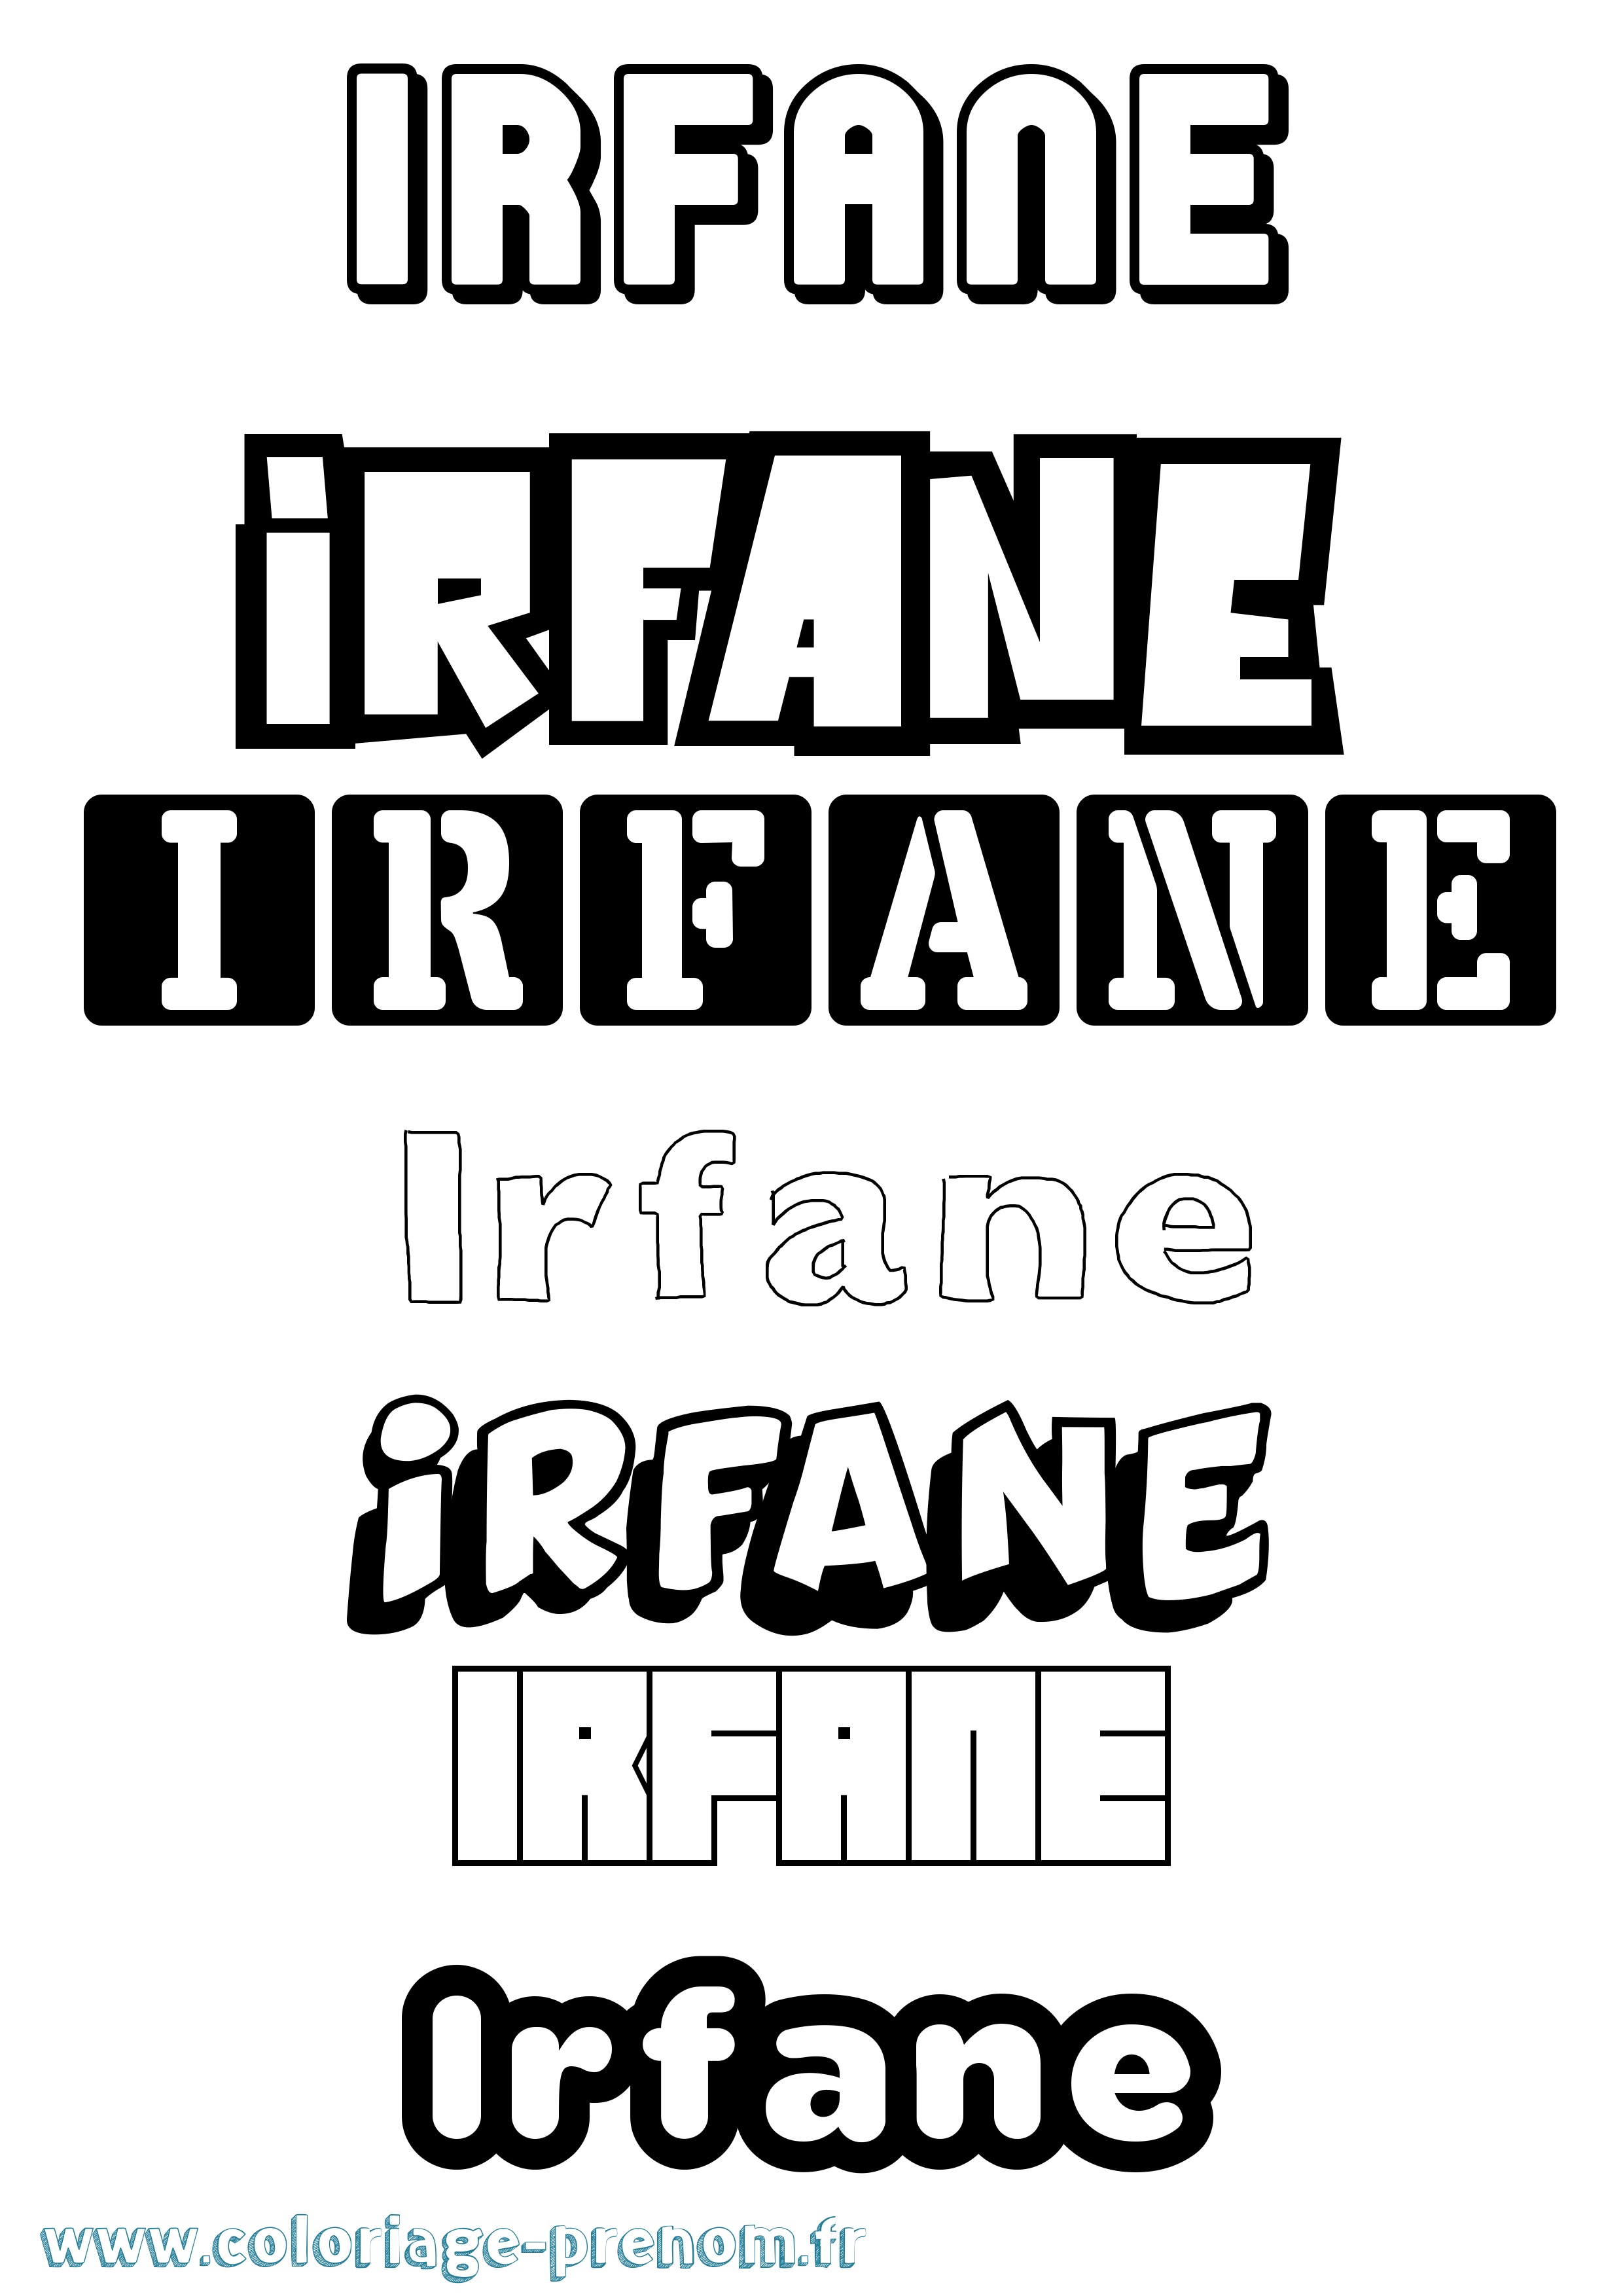 Coloriage prénom Irfane Simple